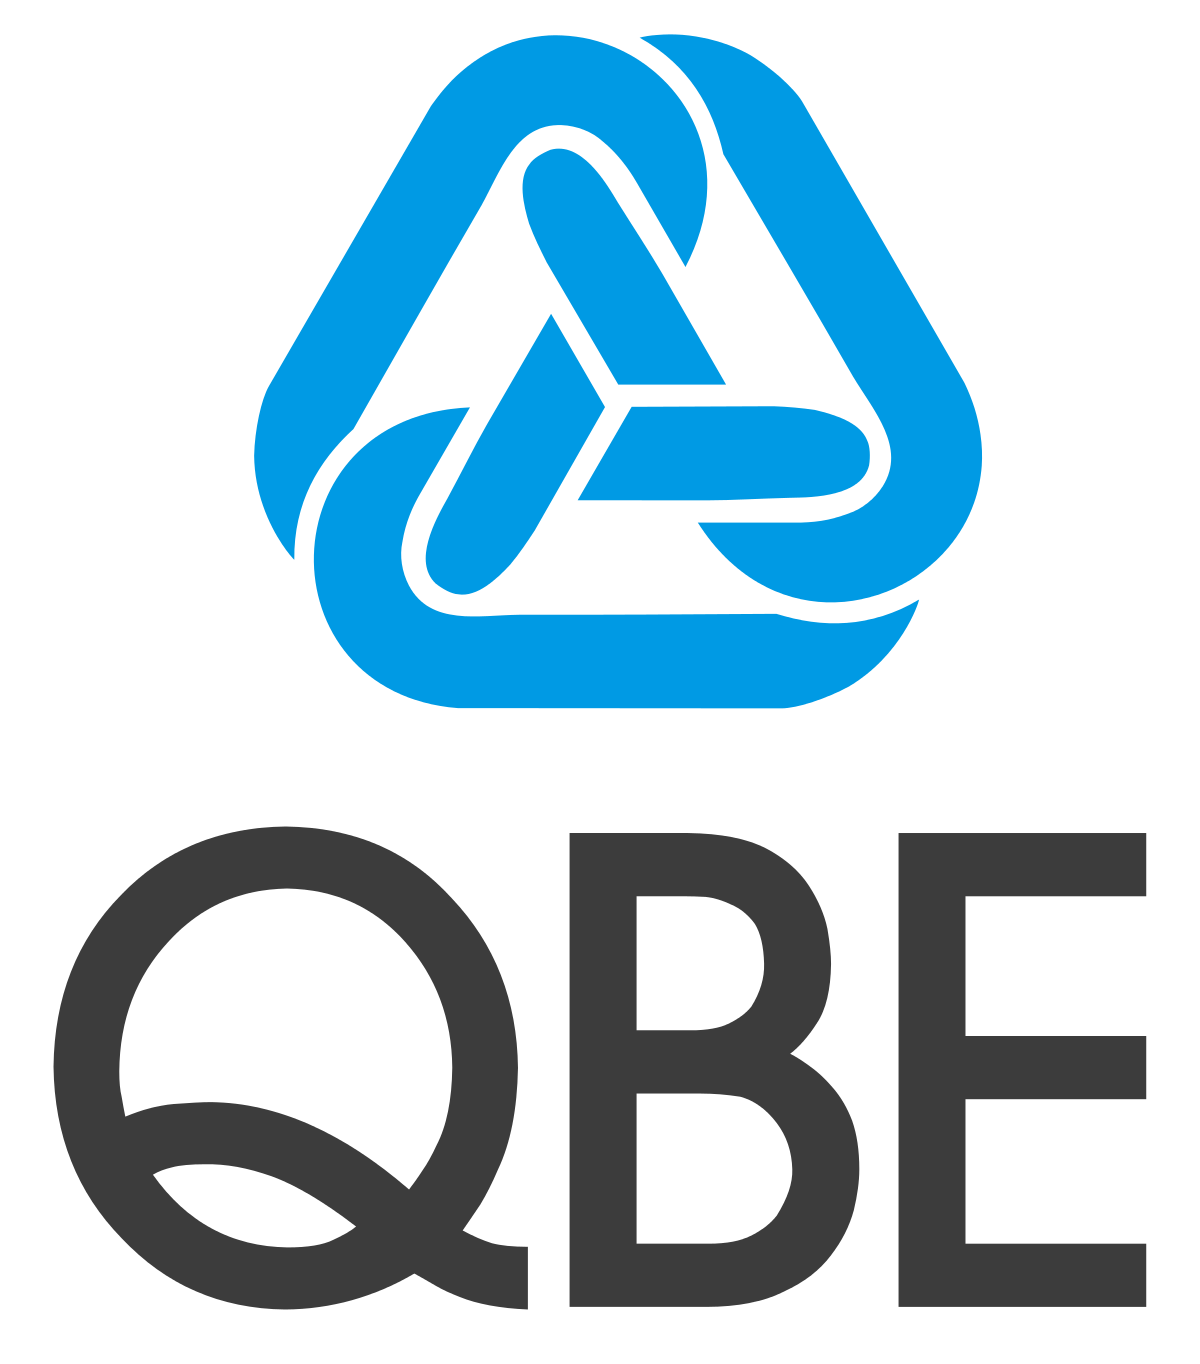 QBE : Brand Short Description Type Here.